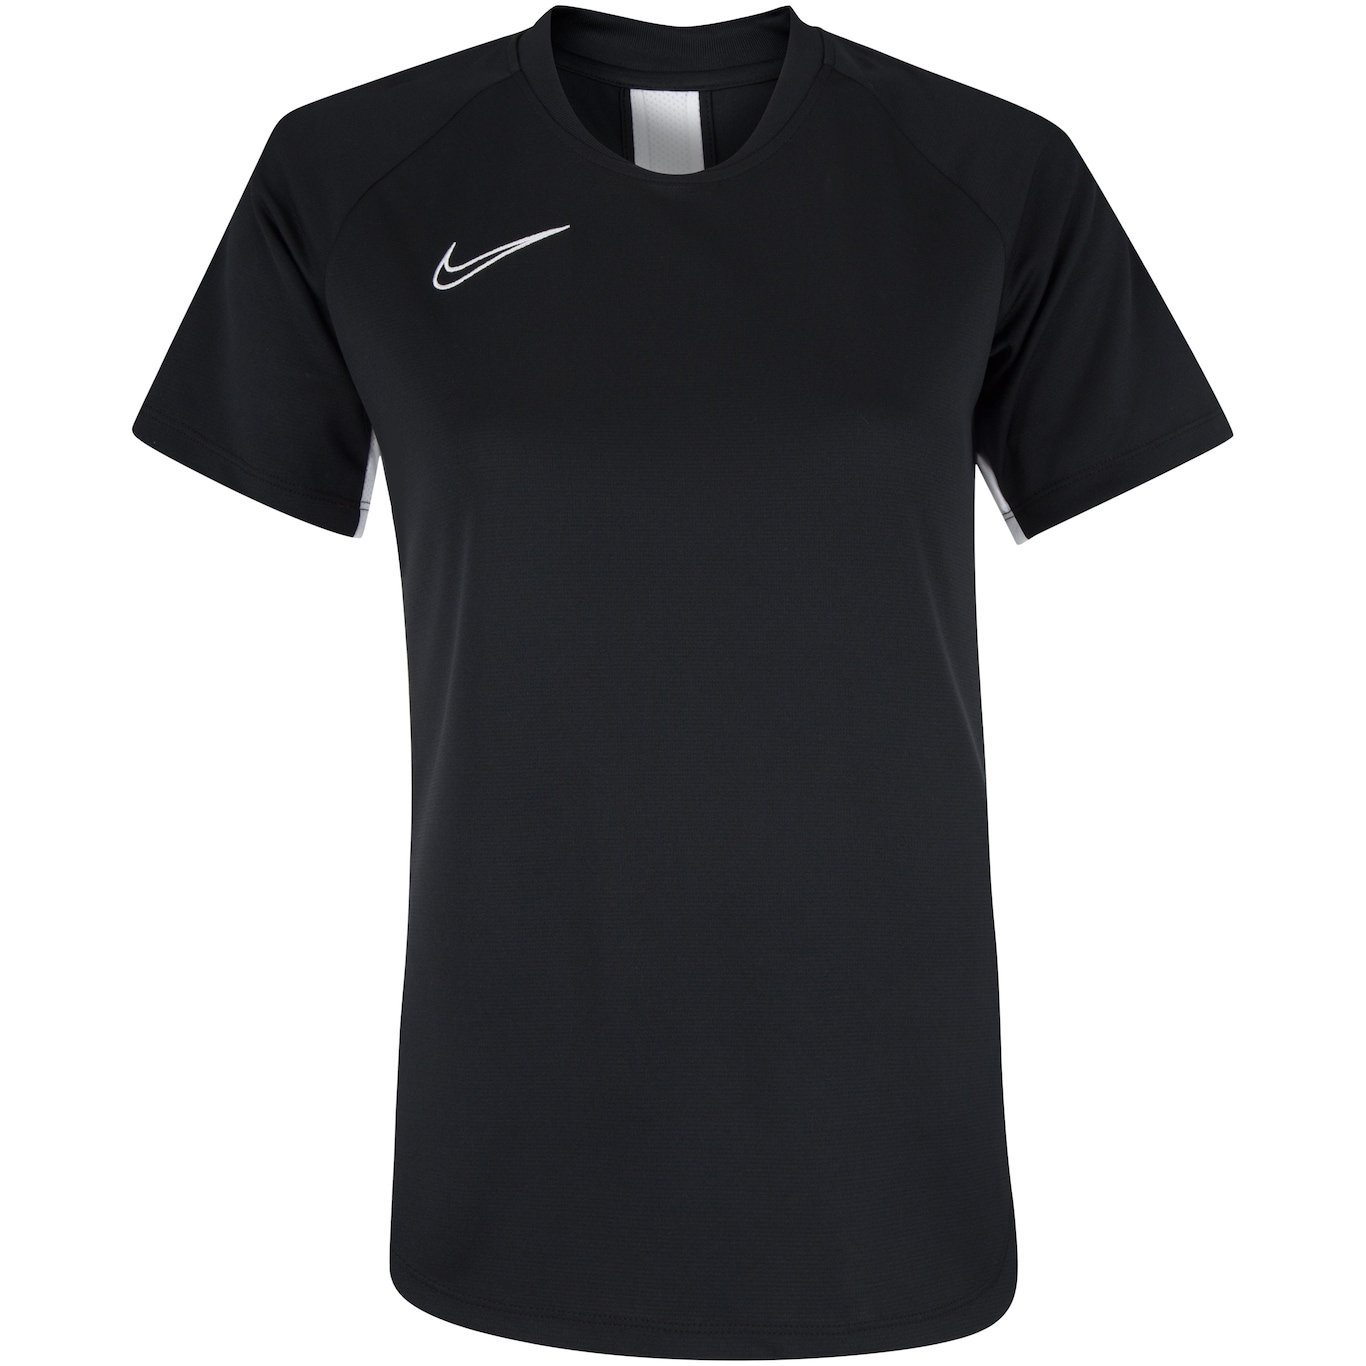 Camiseta Nike Dry Academy 19 Top - Feminina